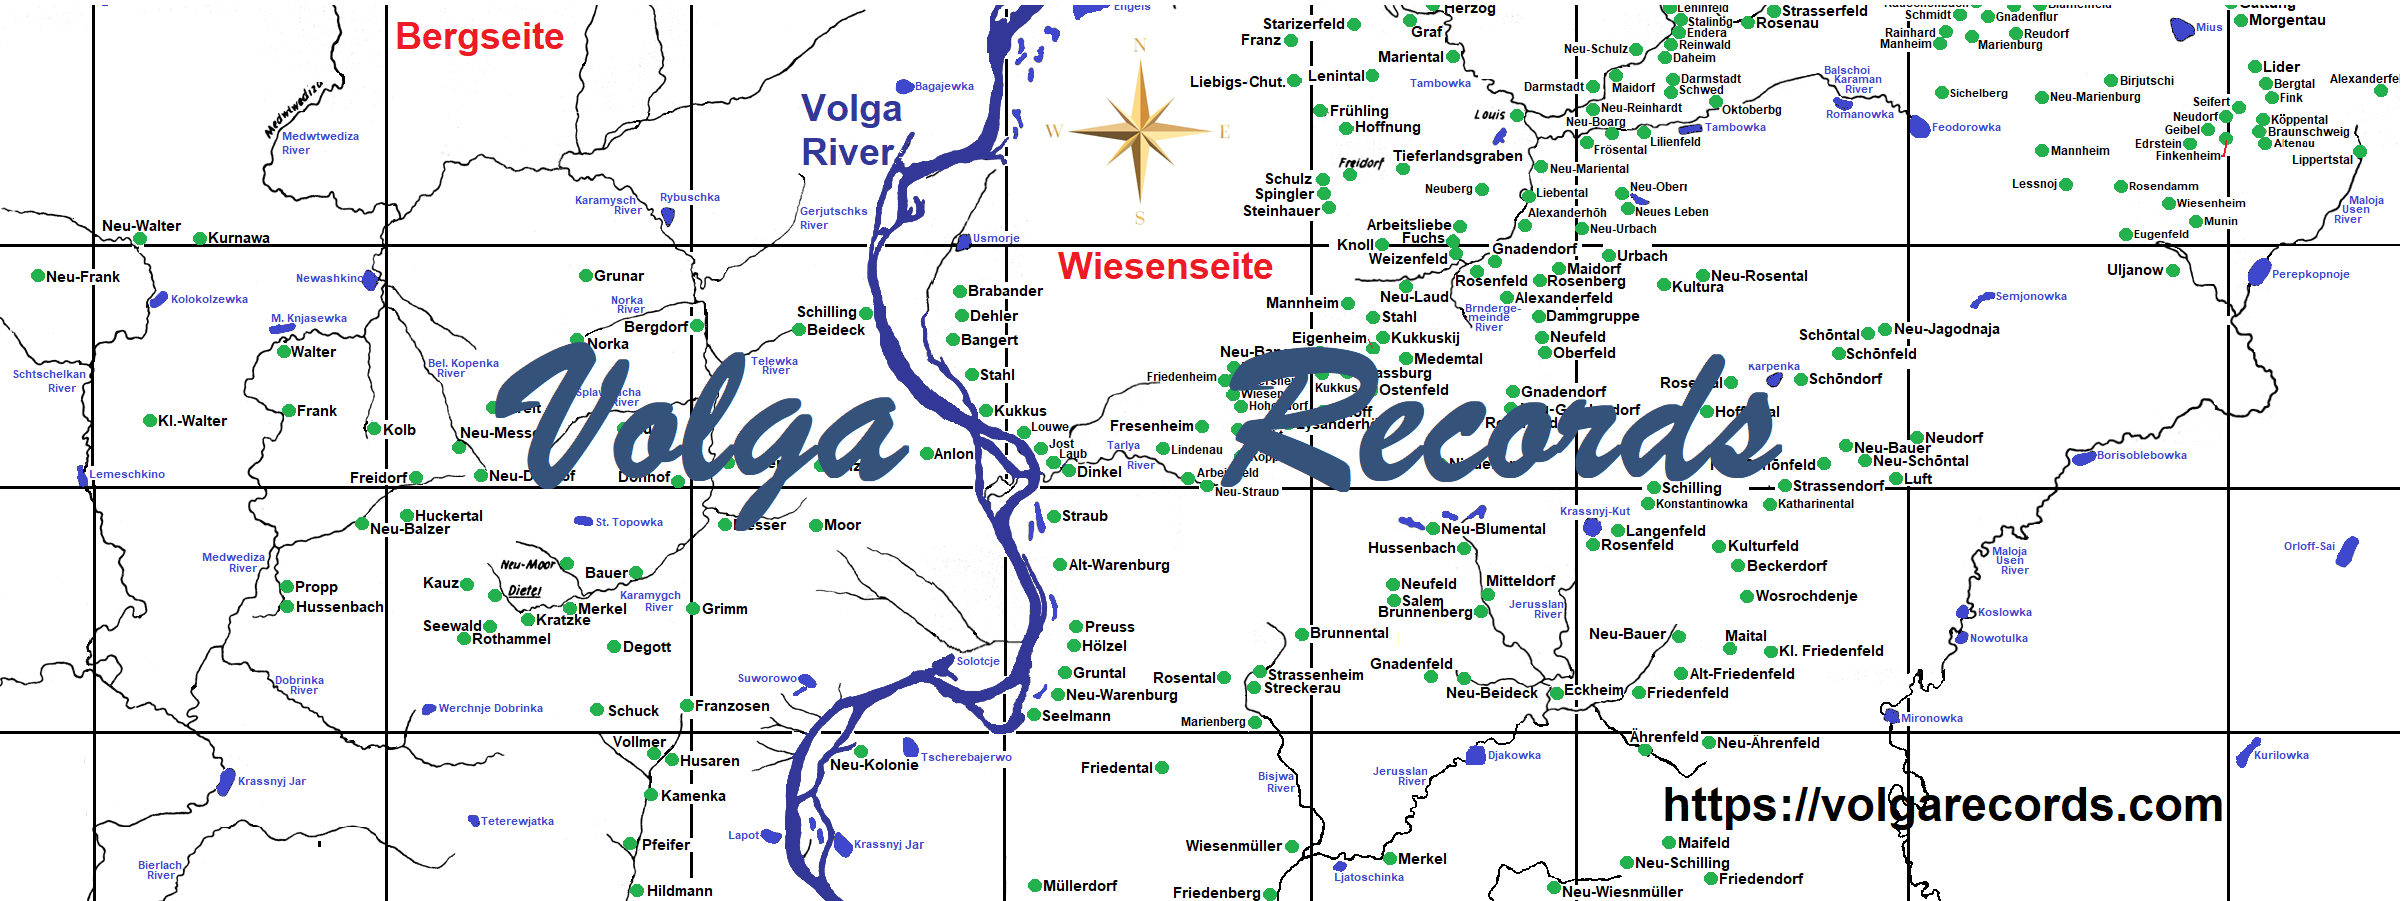 Volga Parish Records